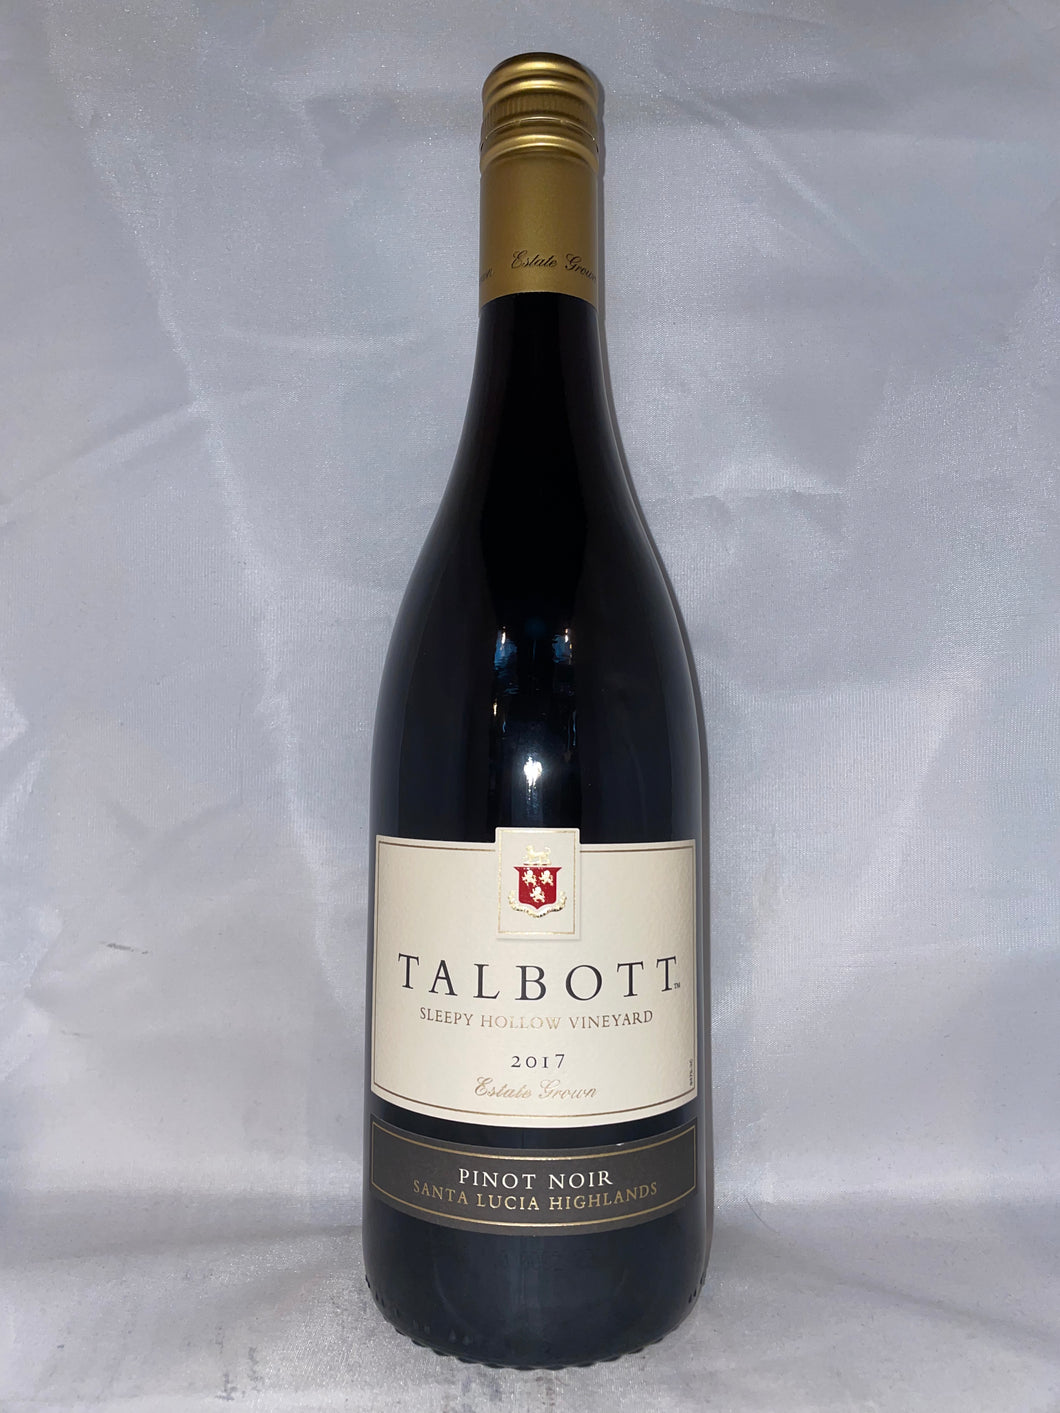 Talbott Sleepy Hollow Vineyard Pinot Noir 2017, Santa Lucia Highlands